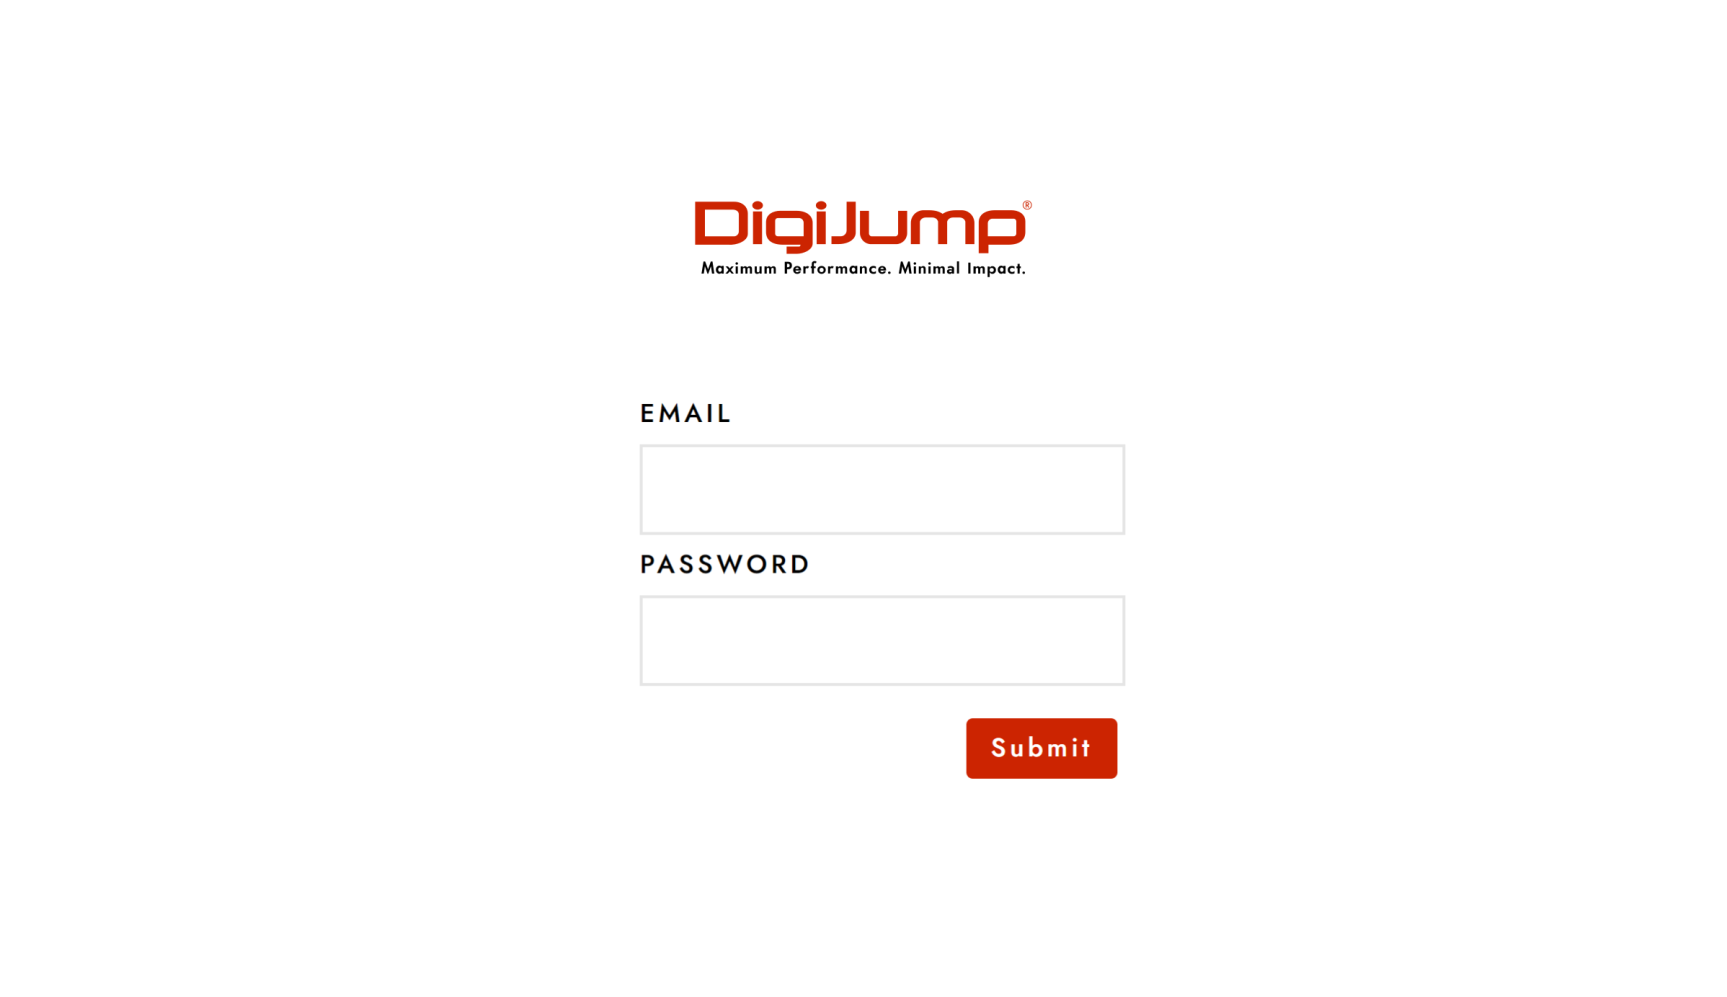 DigiJump Technologies